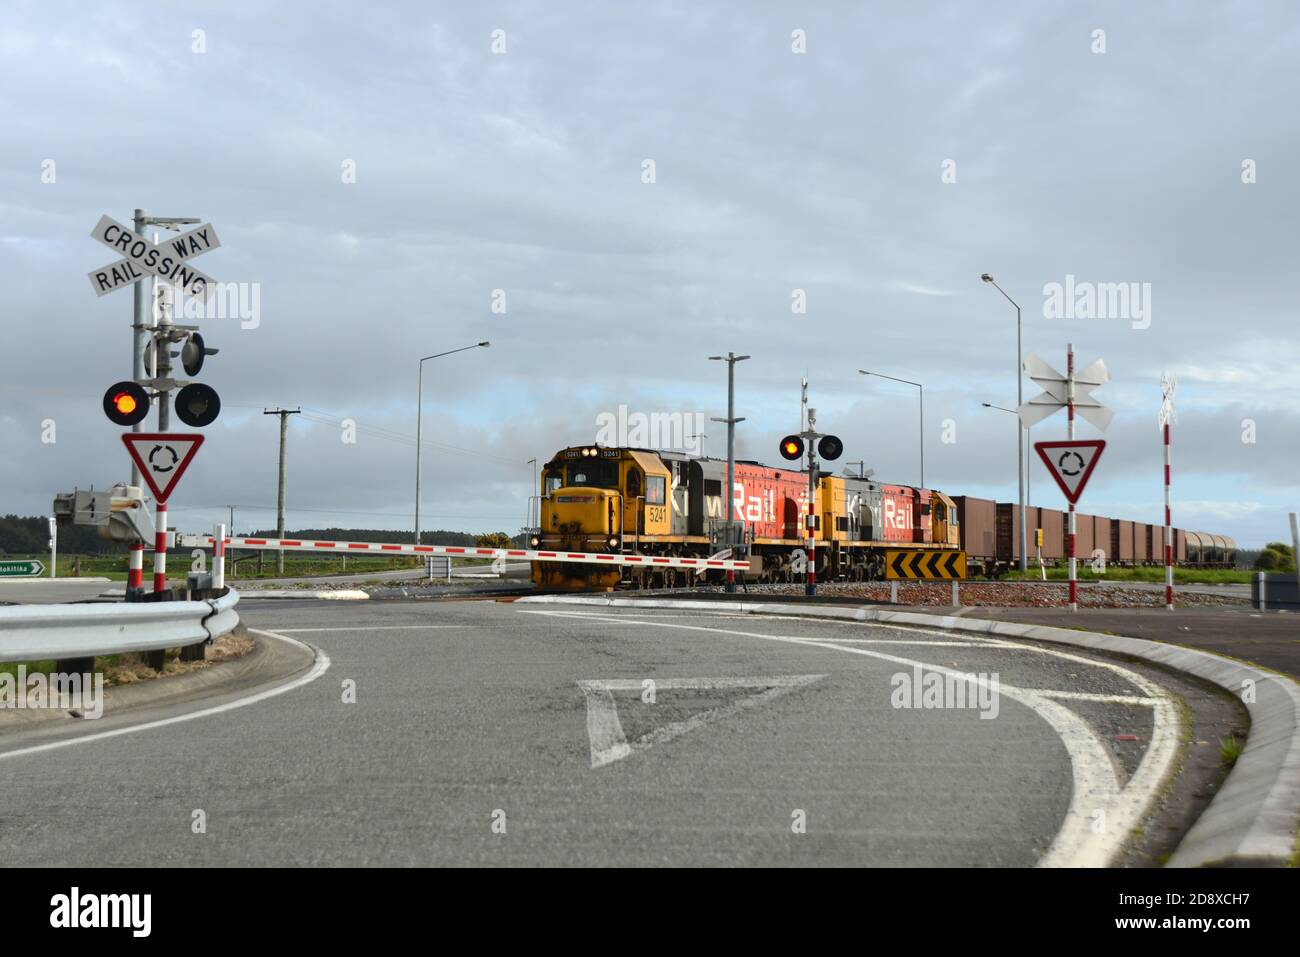 ARAHURA, NUEVA ZELANDA, 29 DE AGOSTO de 2020: Un tren de carga cruza la carretera principal en Arahura en la carretera estatal 6. Foto de stock